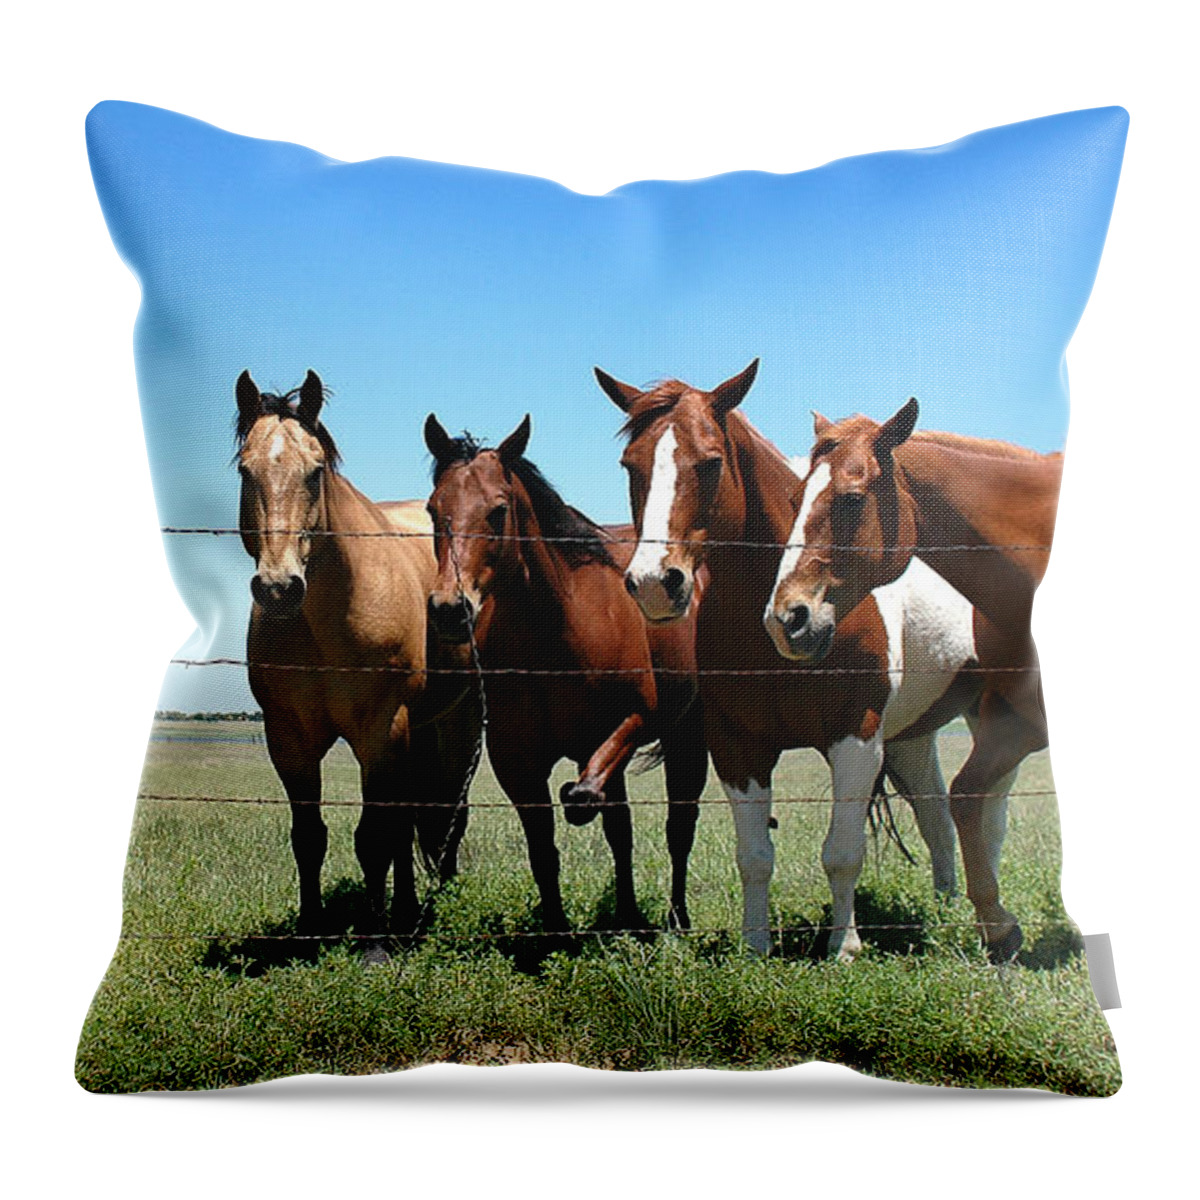 Horses Throw Pillow featuring the photograph Stompin' Flies by Karen Slagle